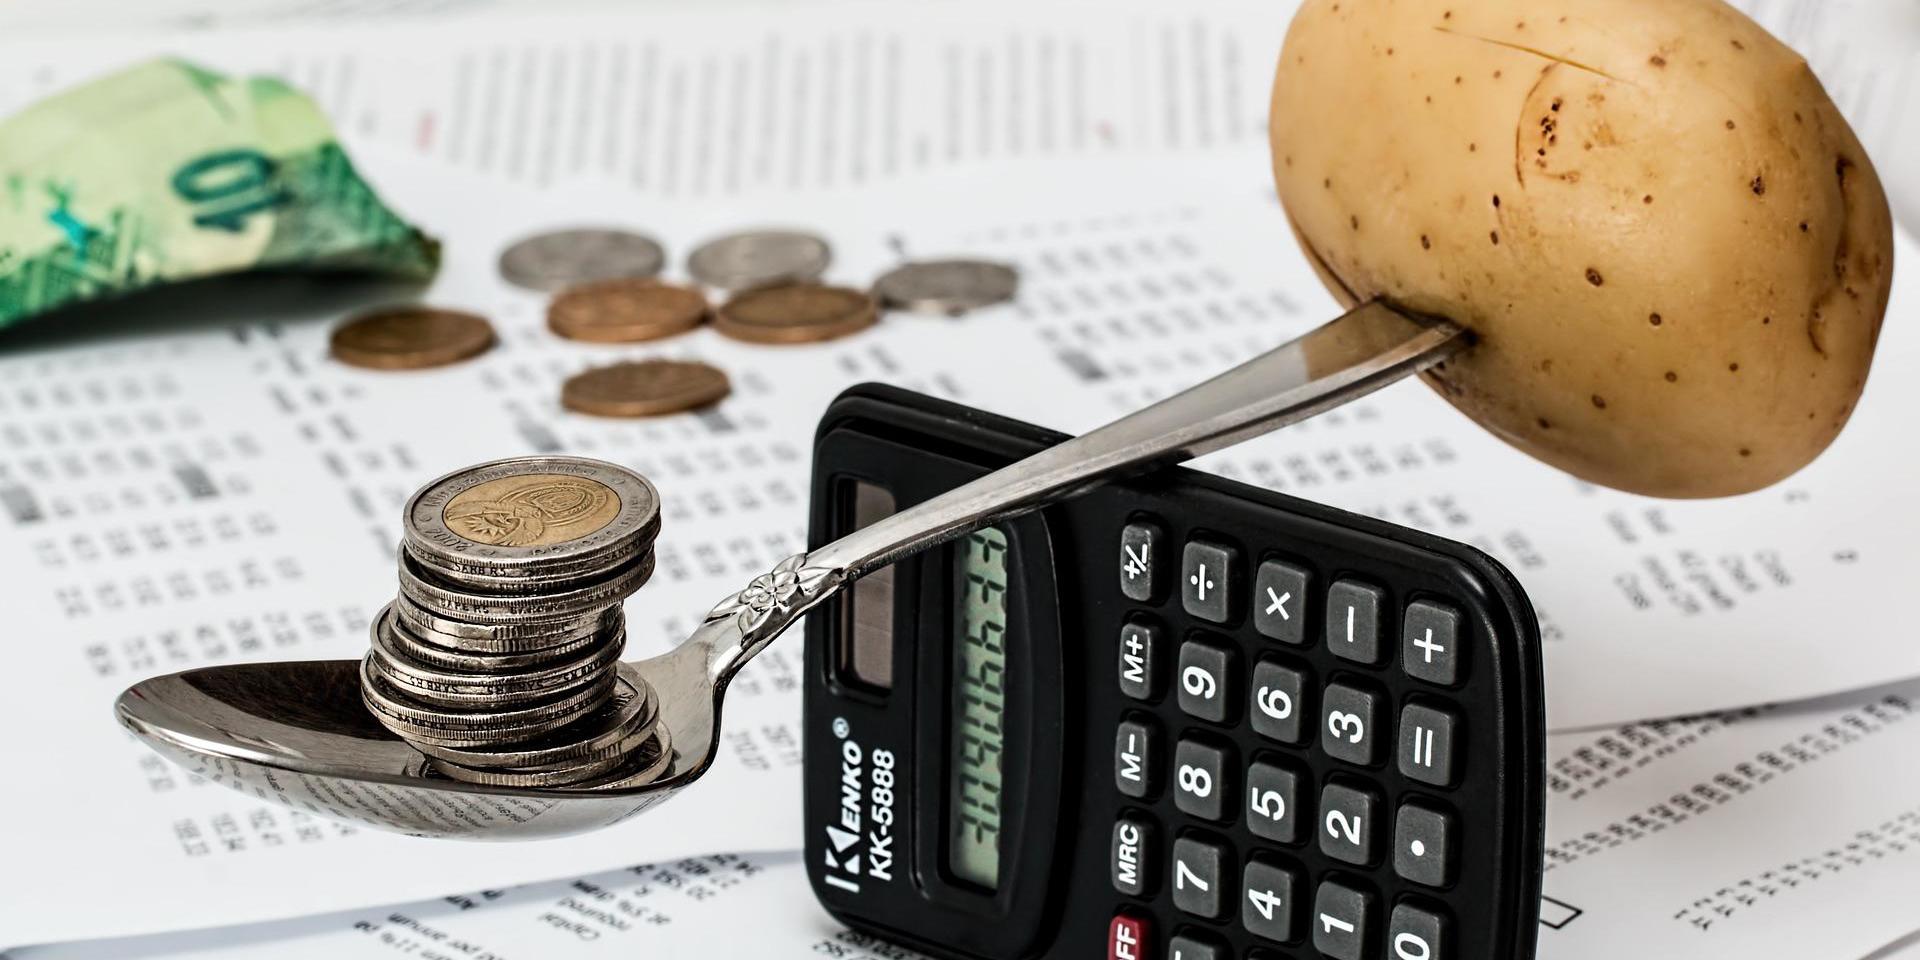 A spoon balancing a potato and some coins, on a calculator